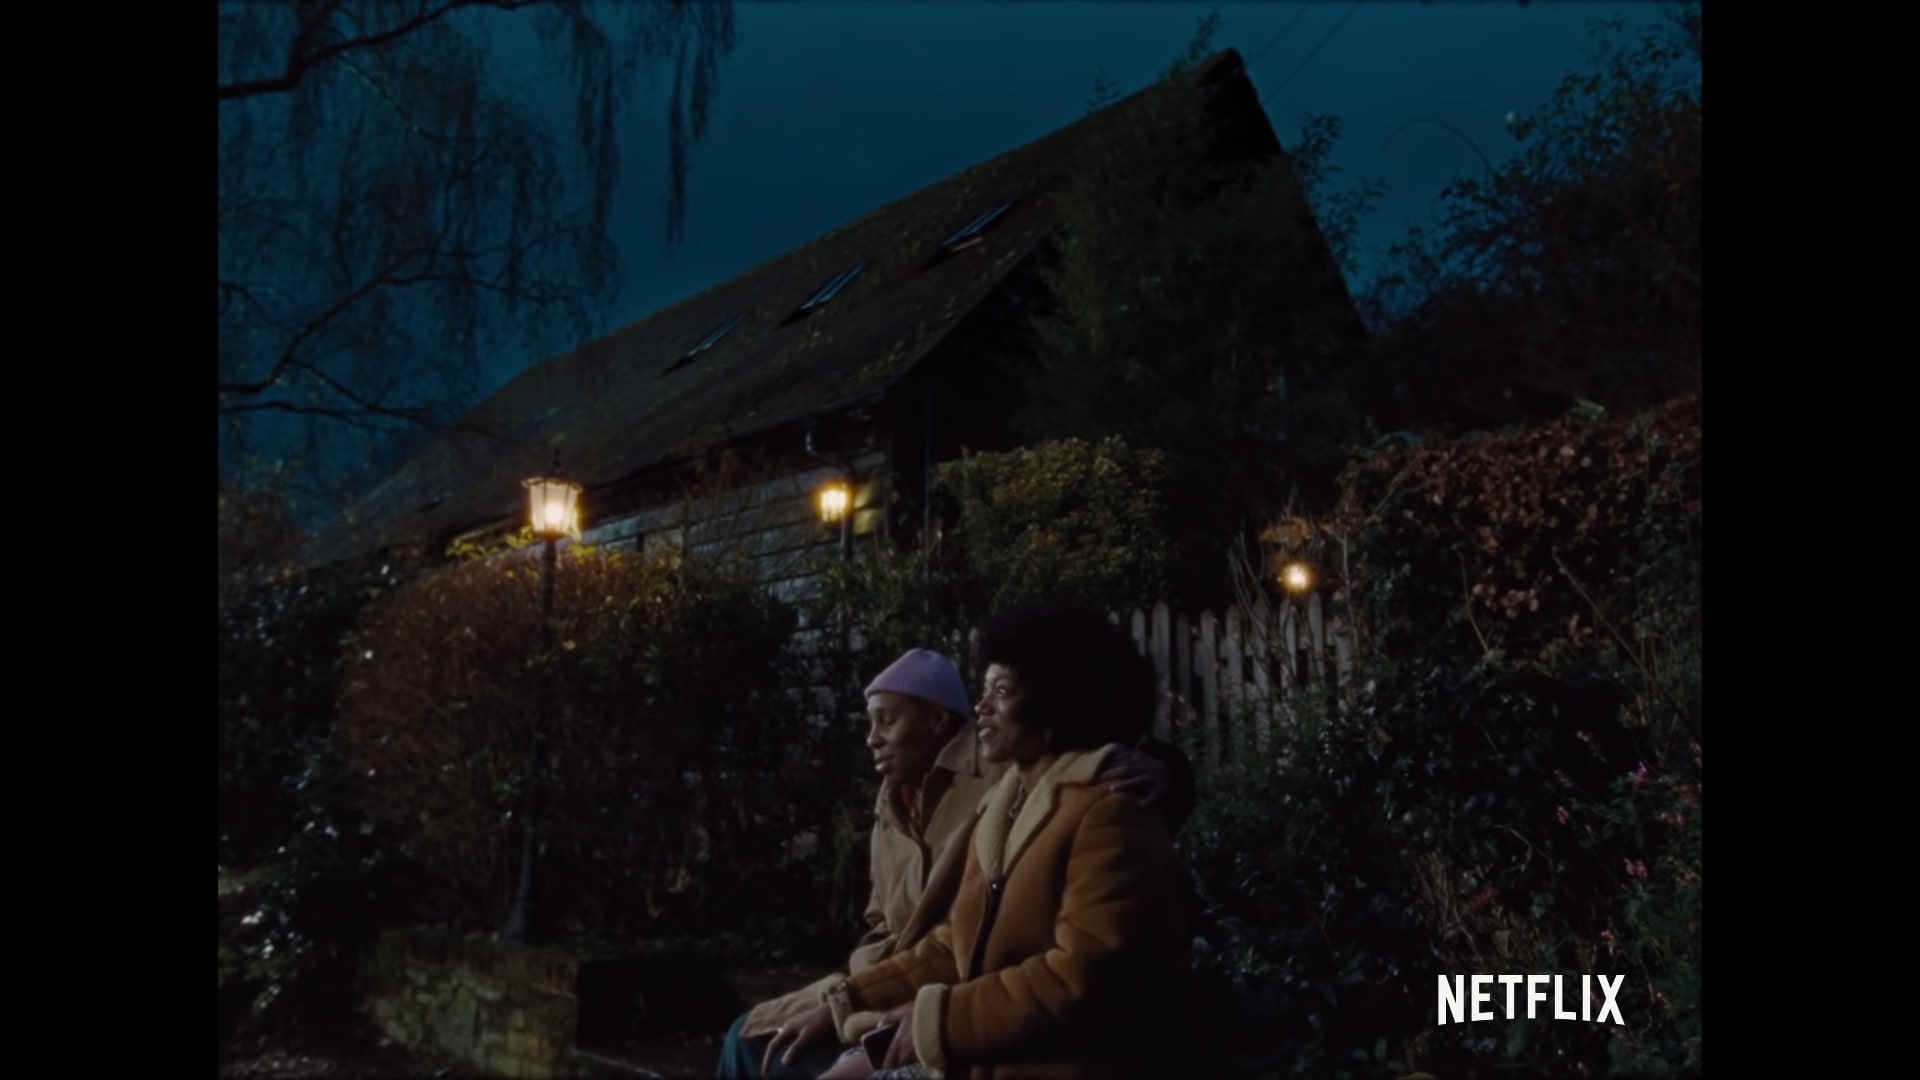 Netflix Master of None Season 3 Trailer, Netflix Drama Series, Coming to Netflix in May 2021